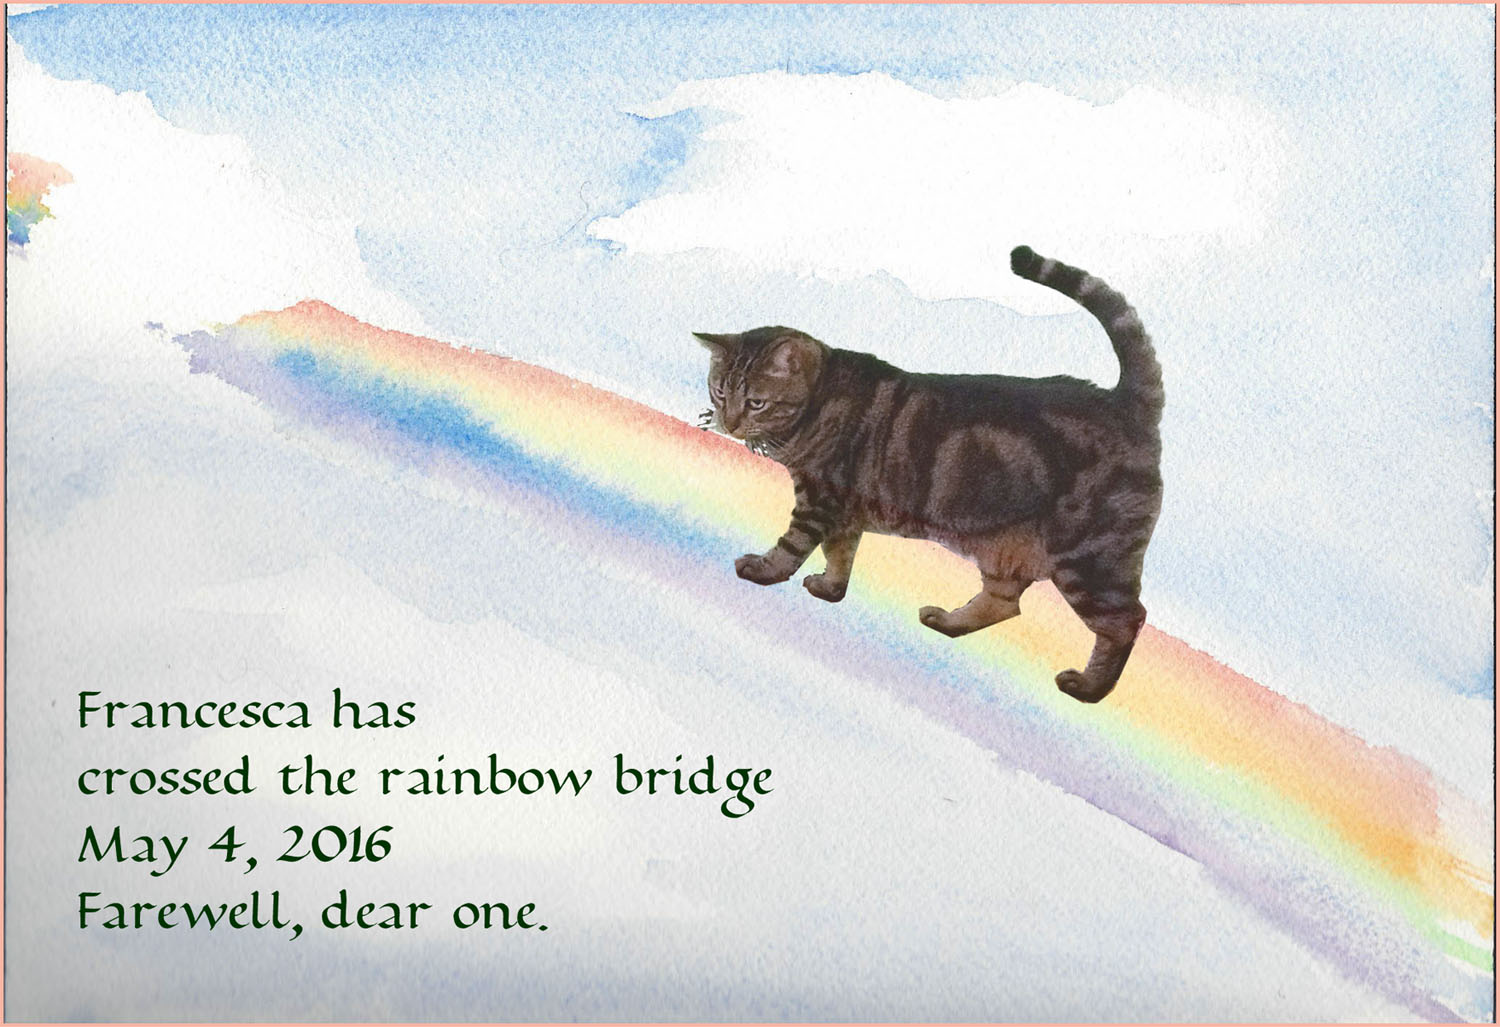 Francesca has crossed the Rainbow Bridge